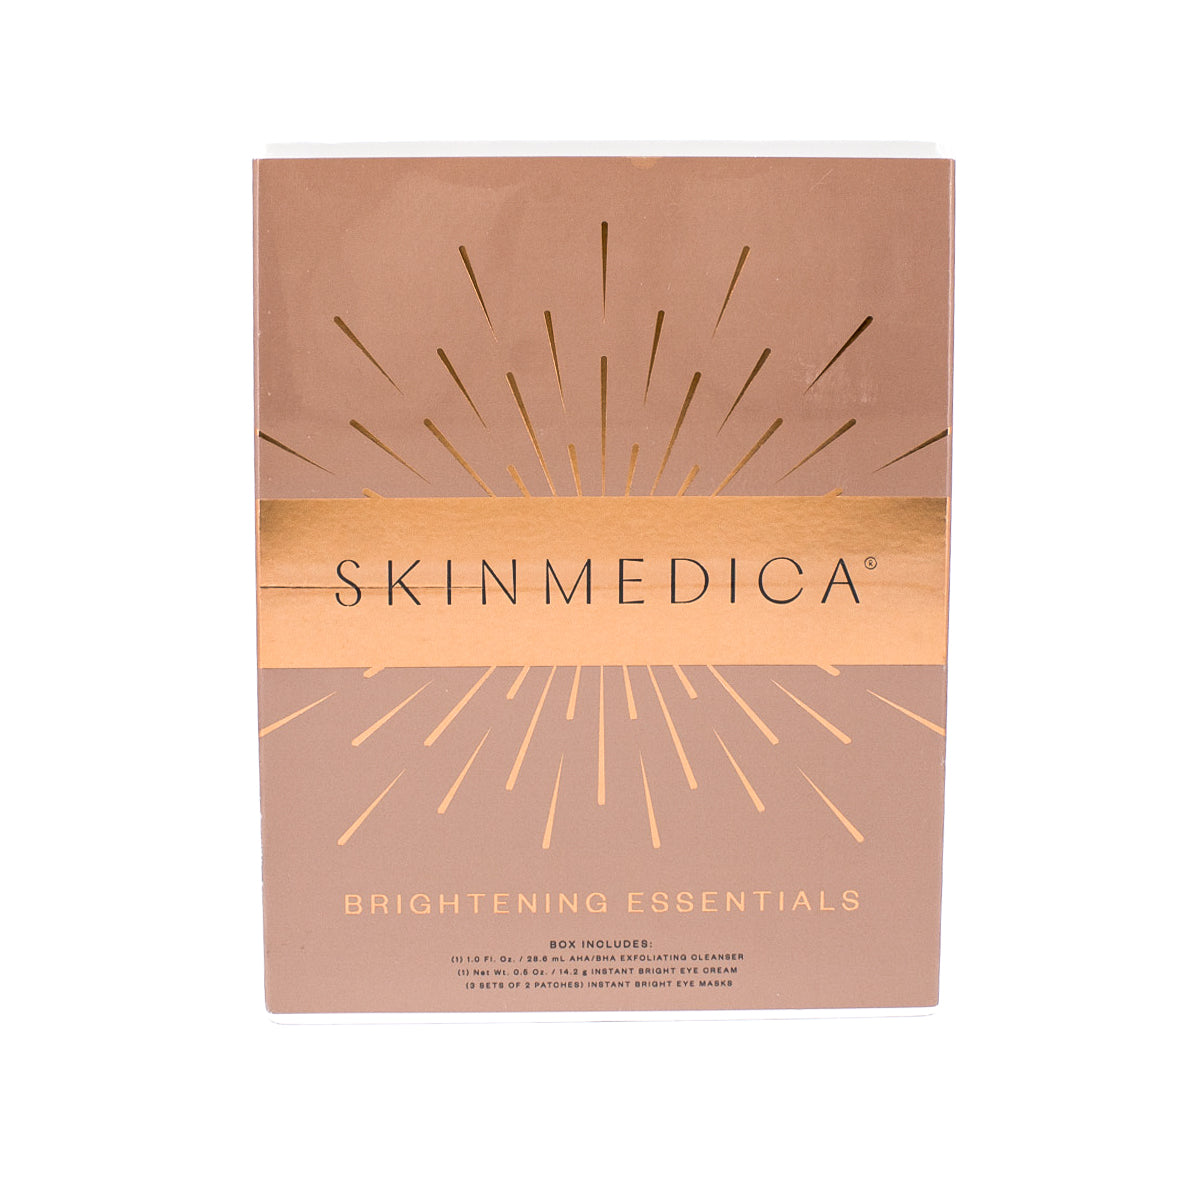 SkinMedica Brightening Essentials Gift Set - Imperfect Box